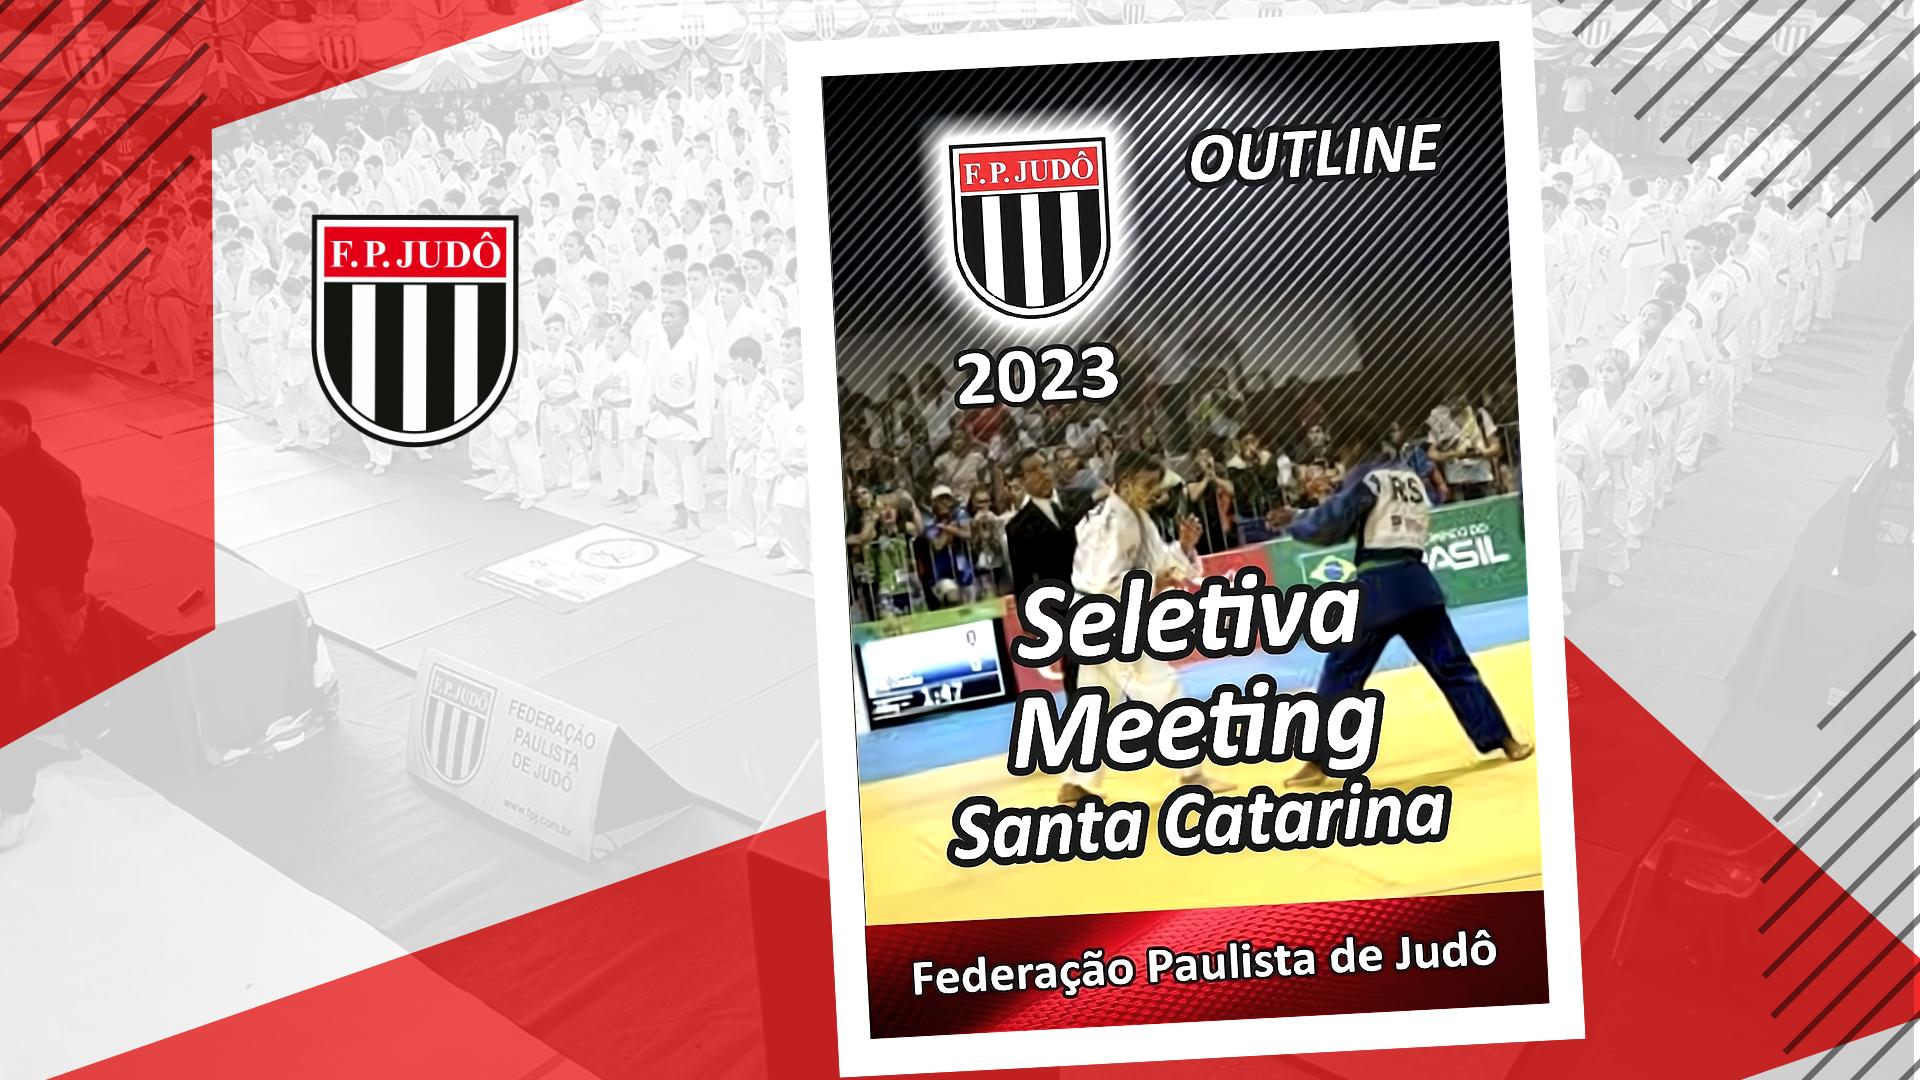 Outline Seletiva Meeting de Santa Catarina